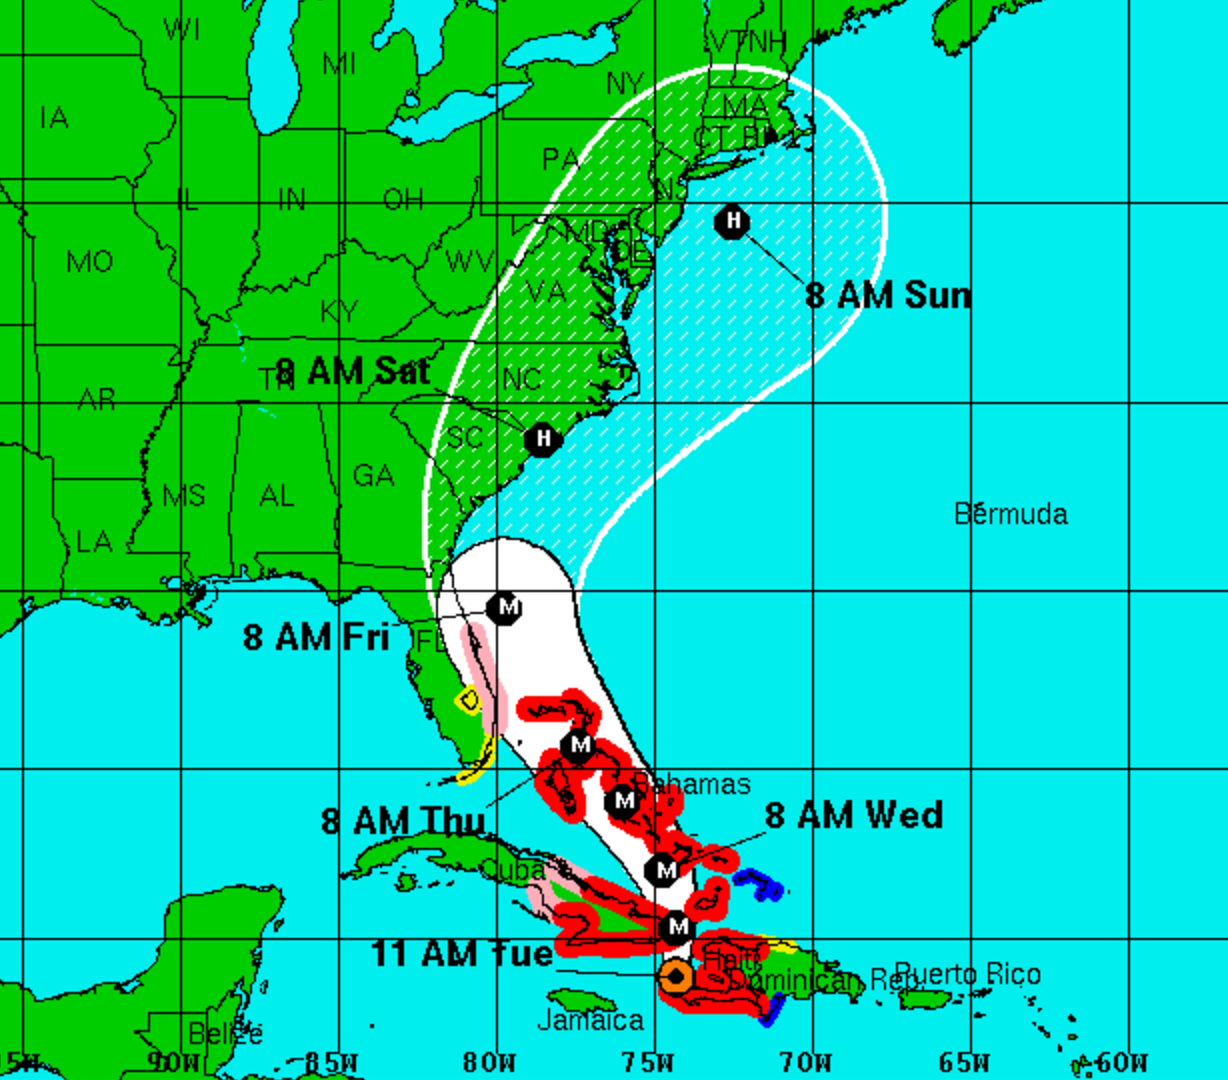 hurricane Matthew update 11am October 4, 2016